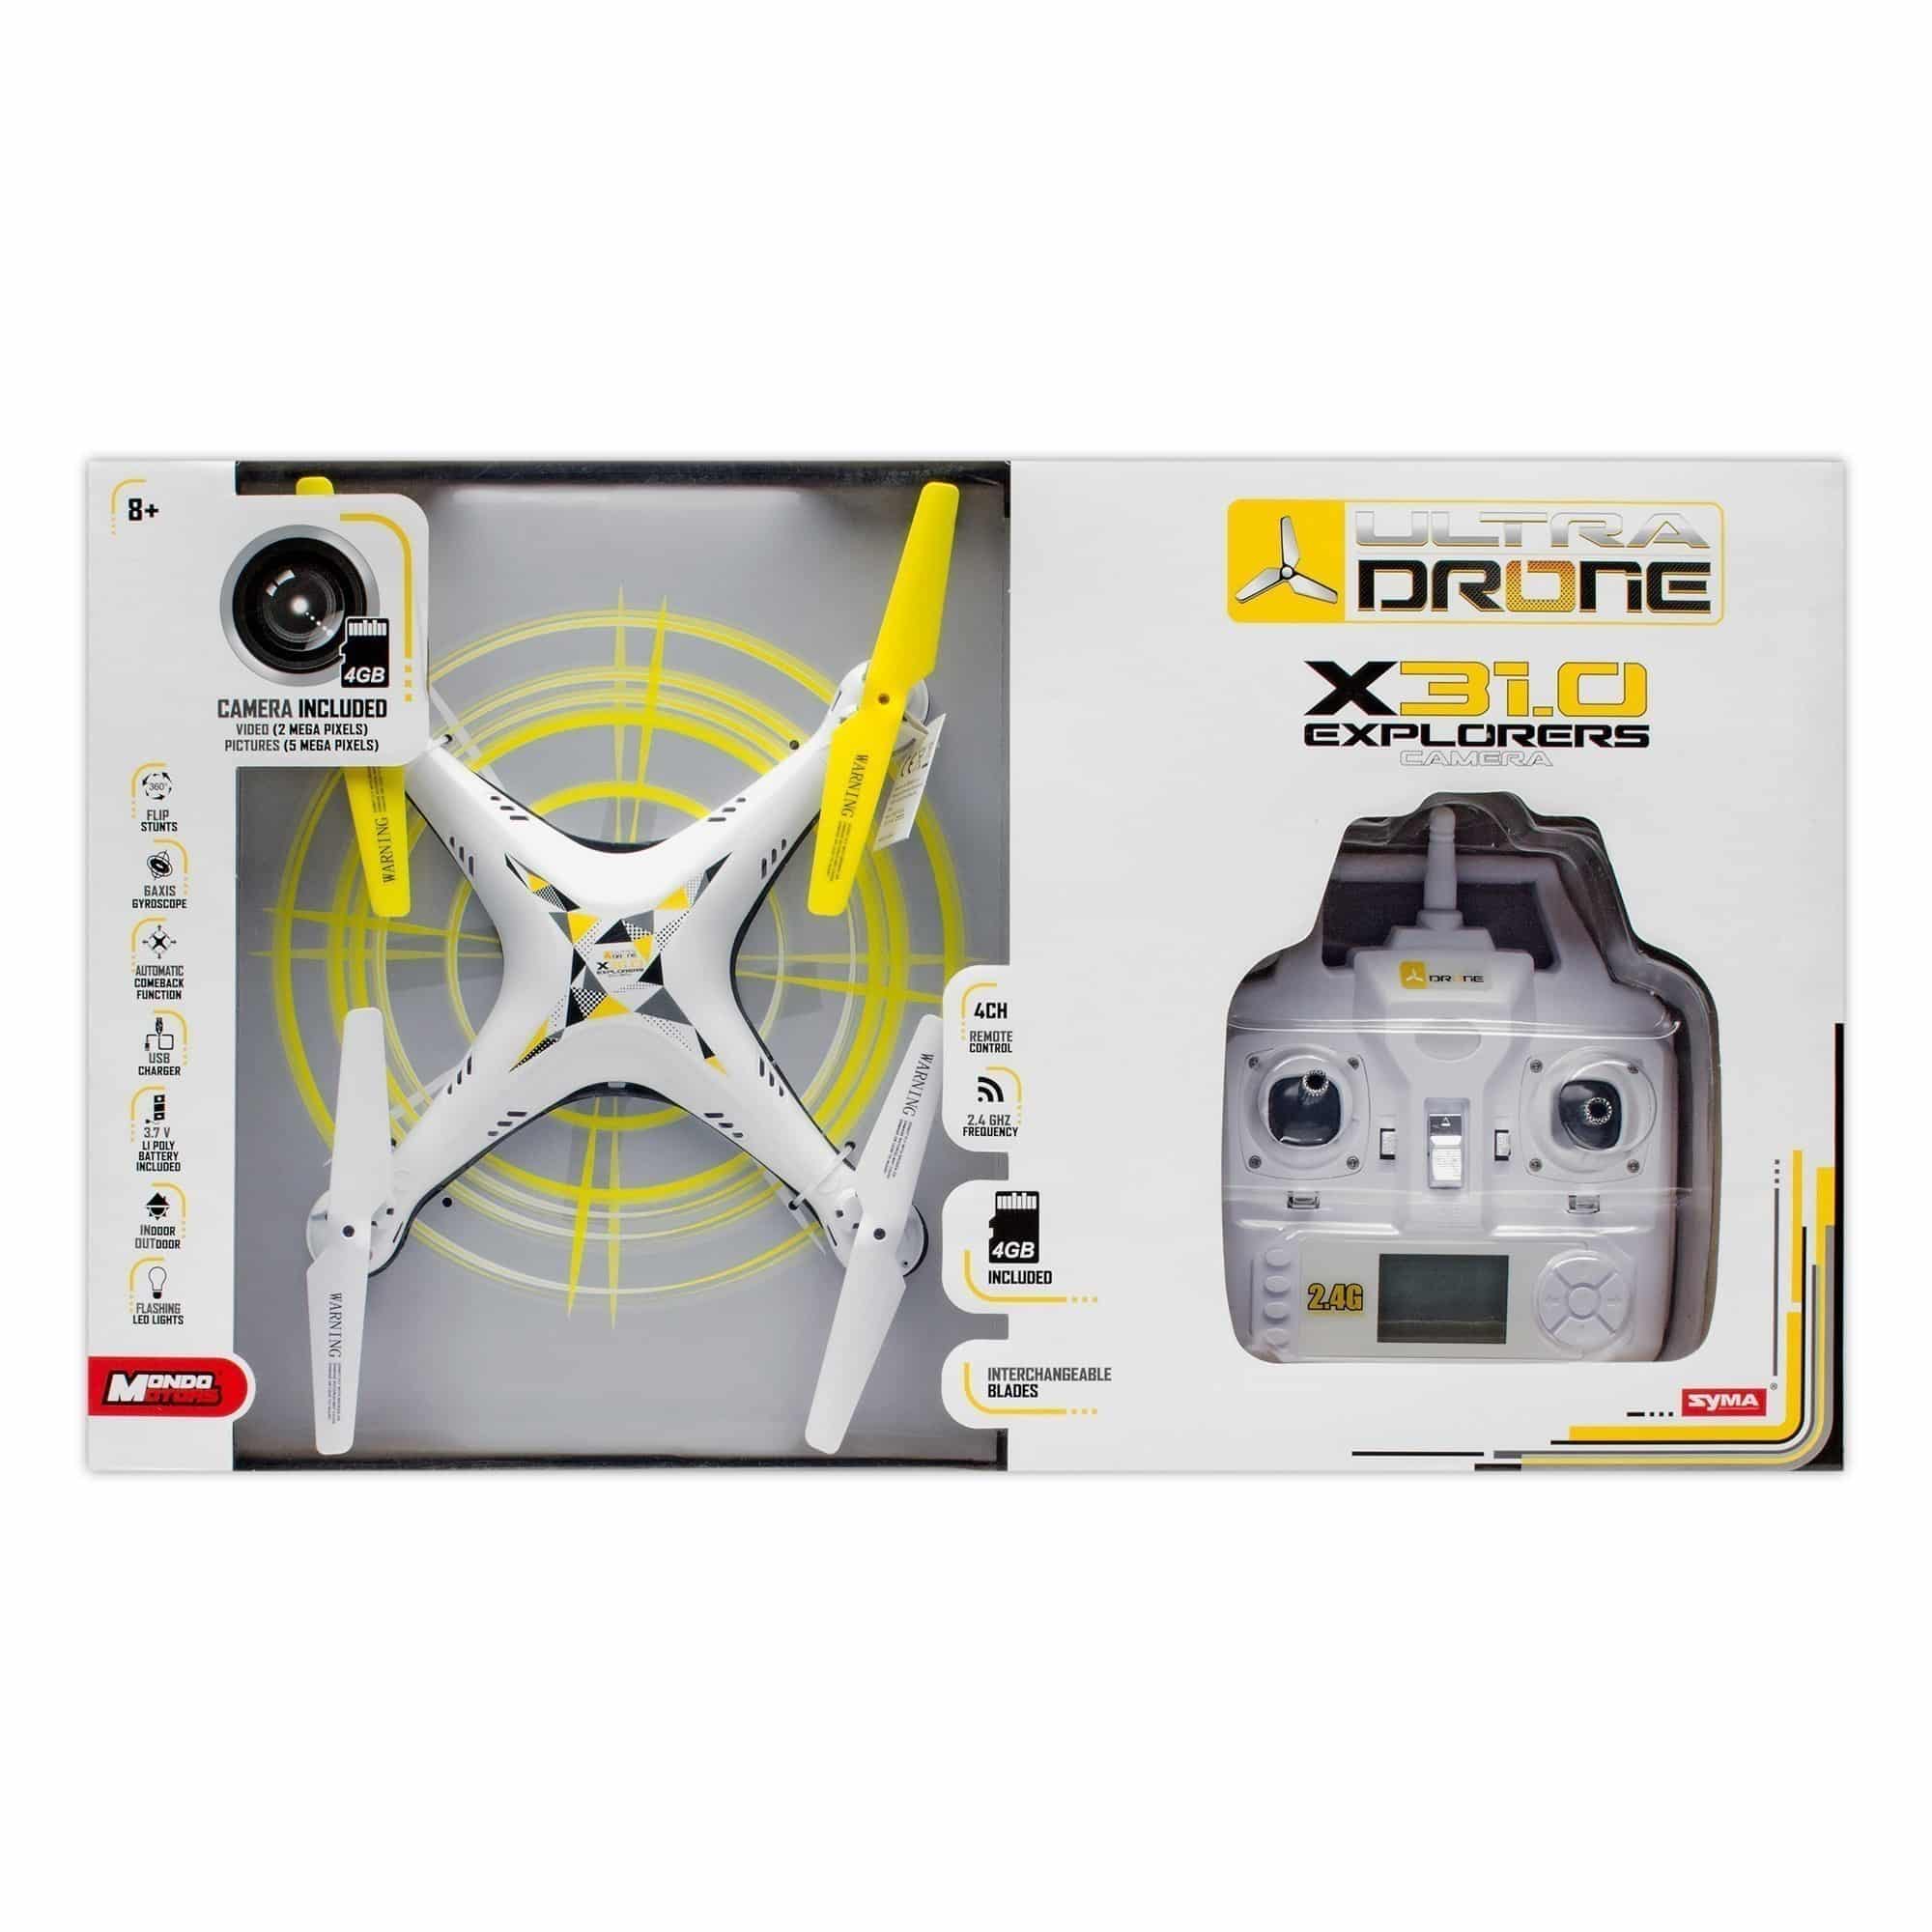 Syma - Ultra Drone R/C X31.0 Explorer With Camera